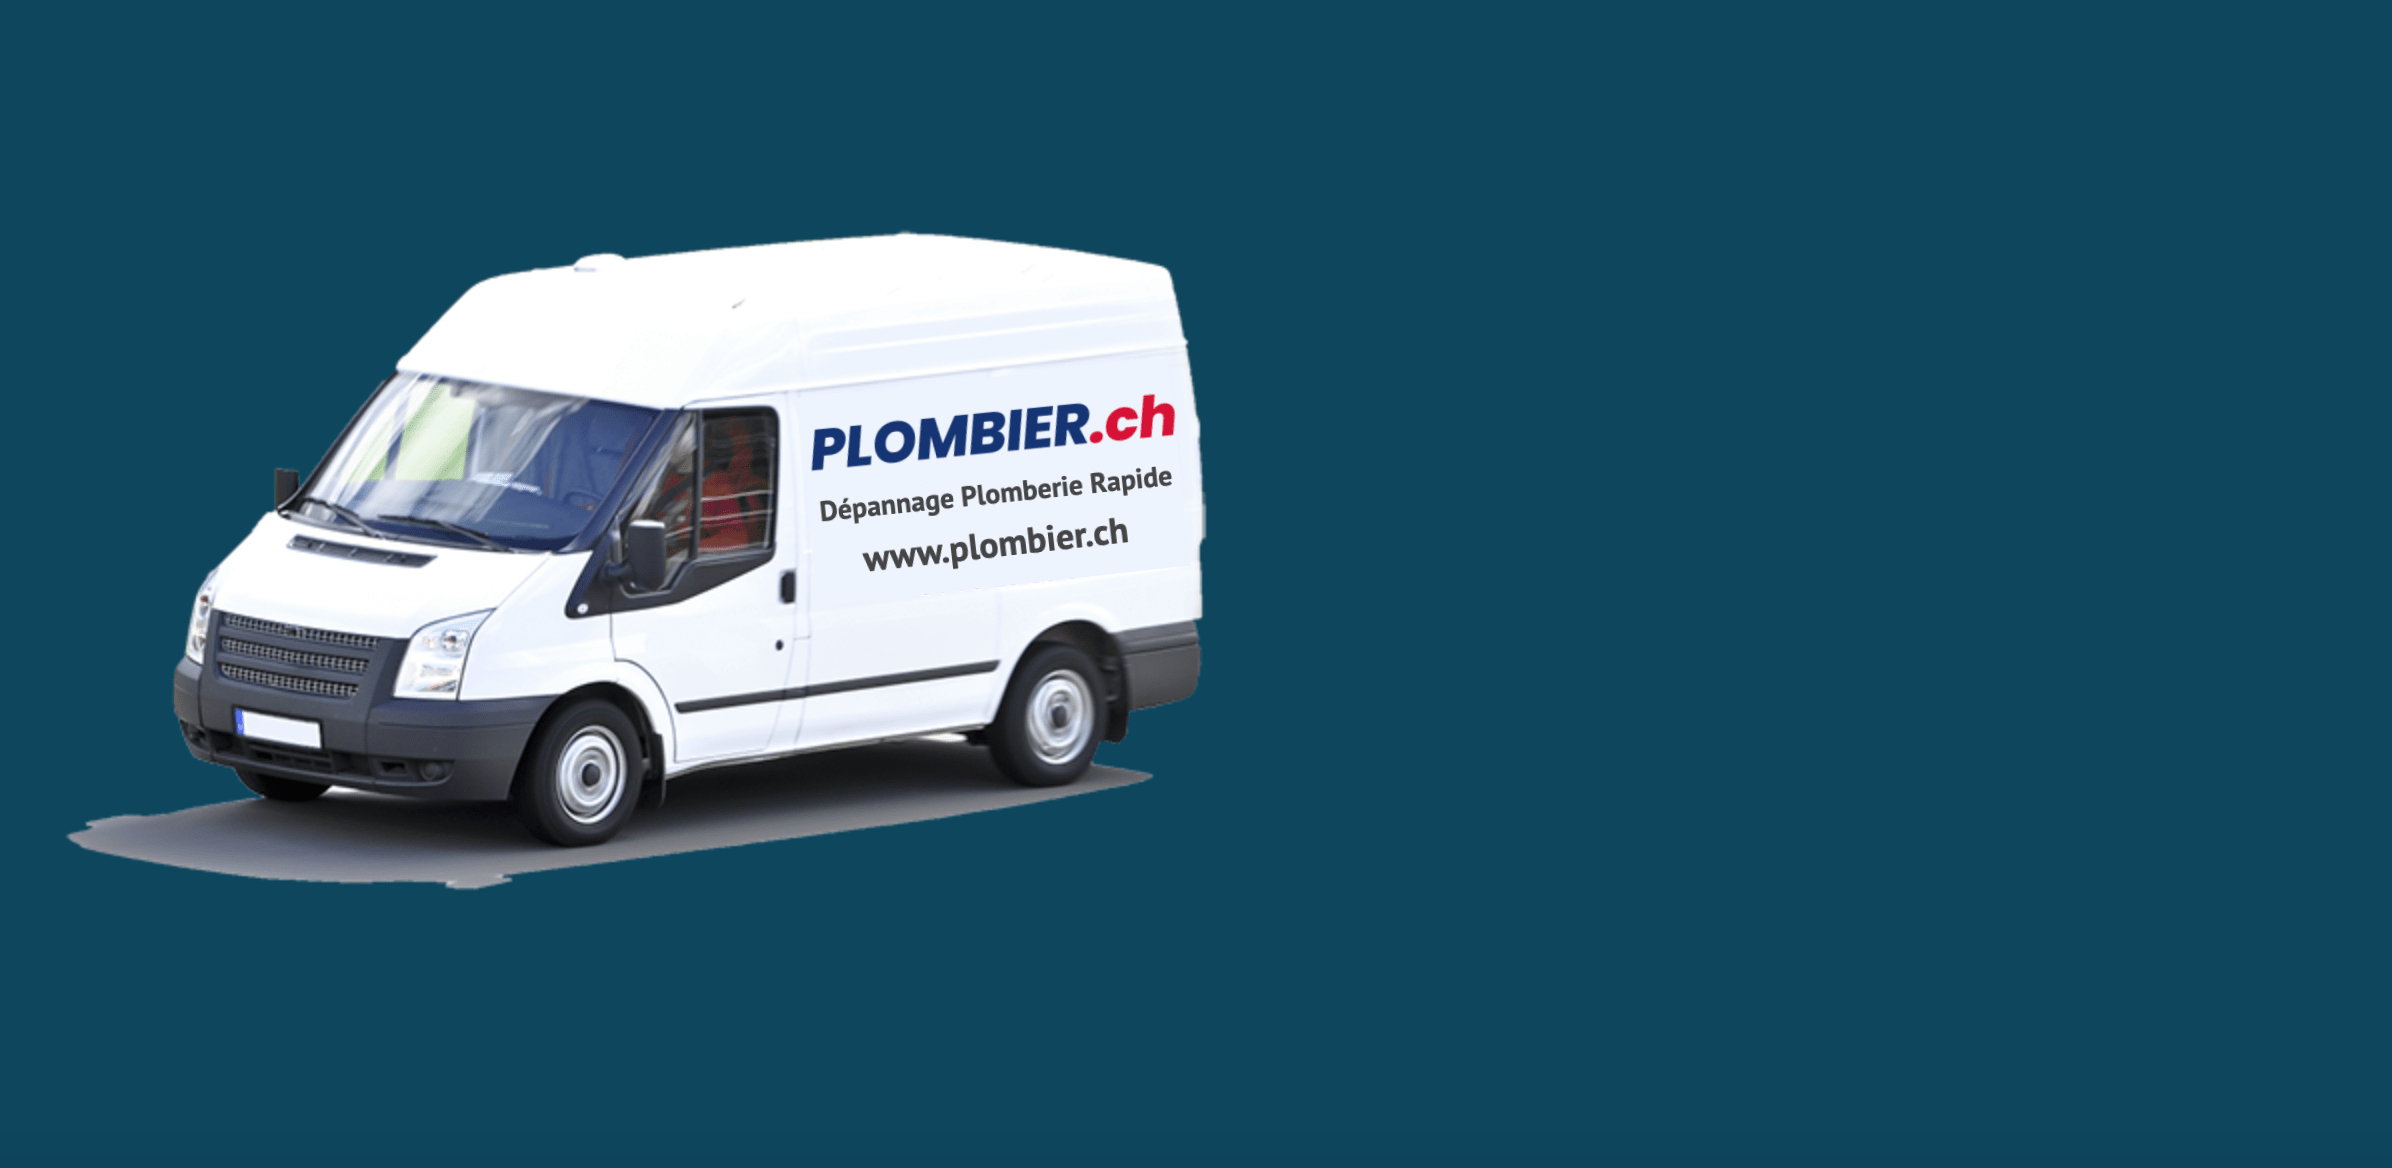 PLOMBIER.ch BackGround-min